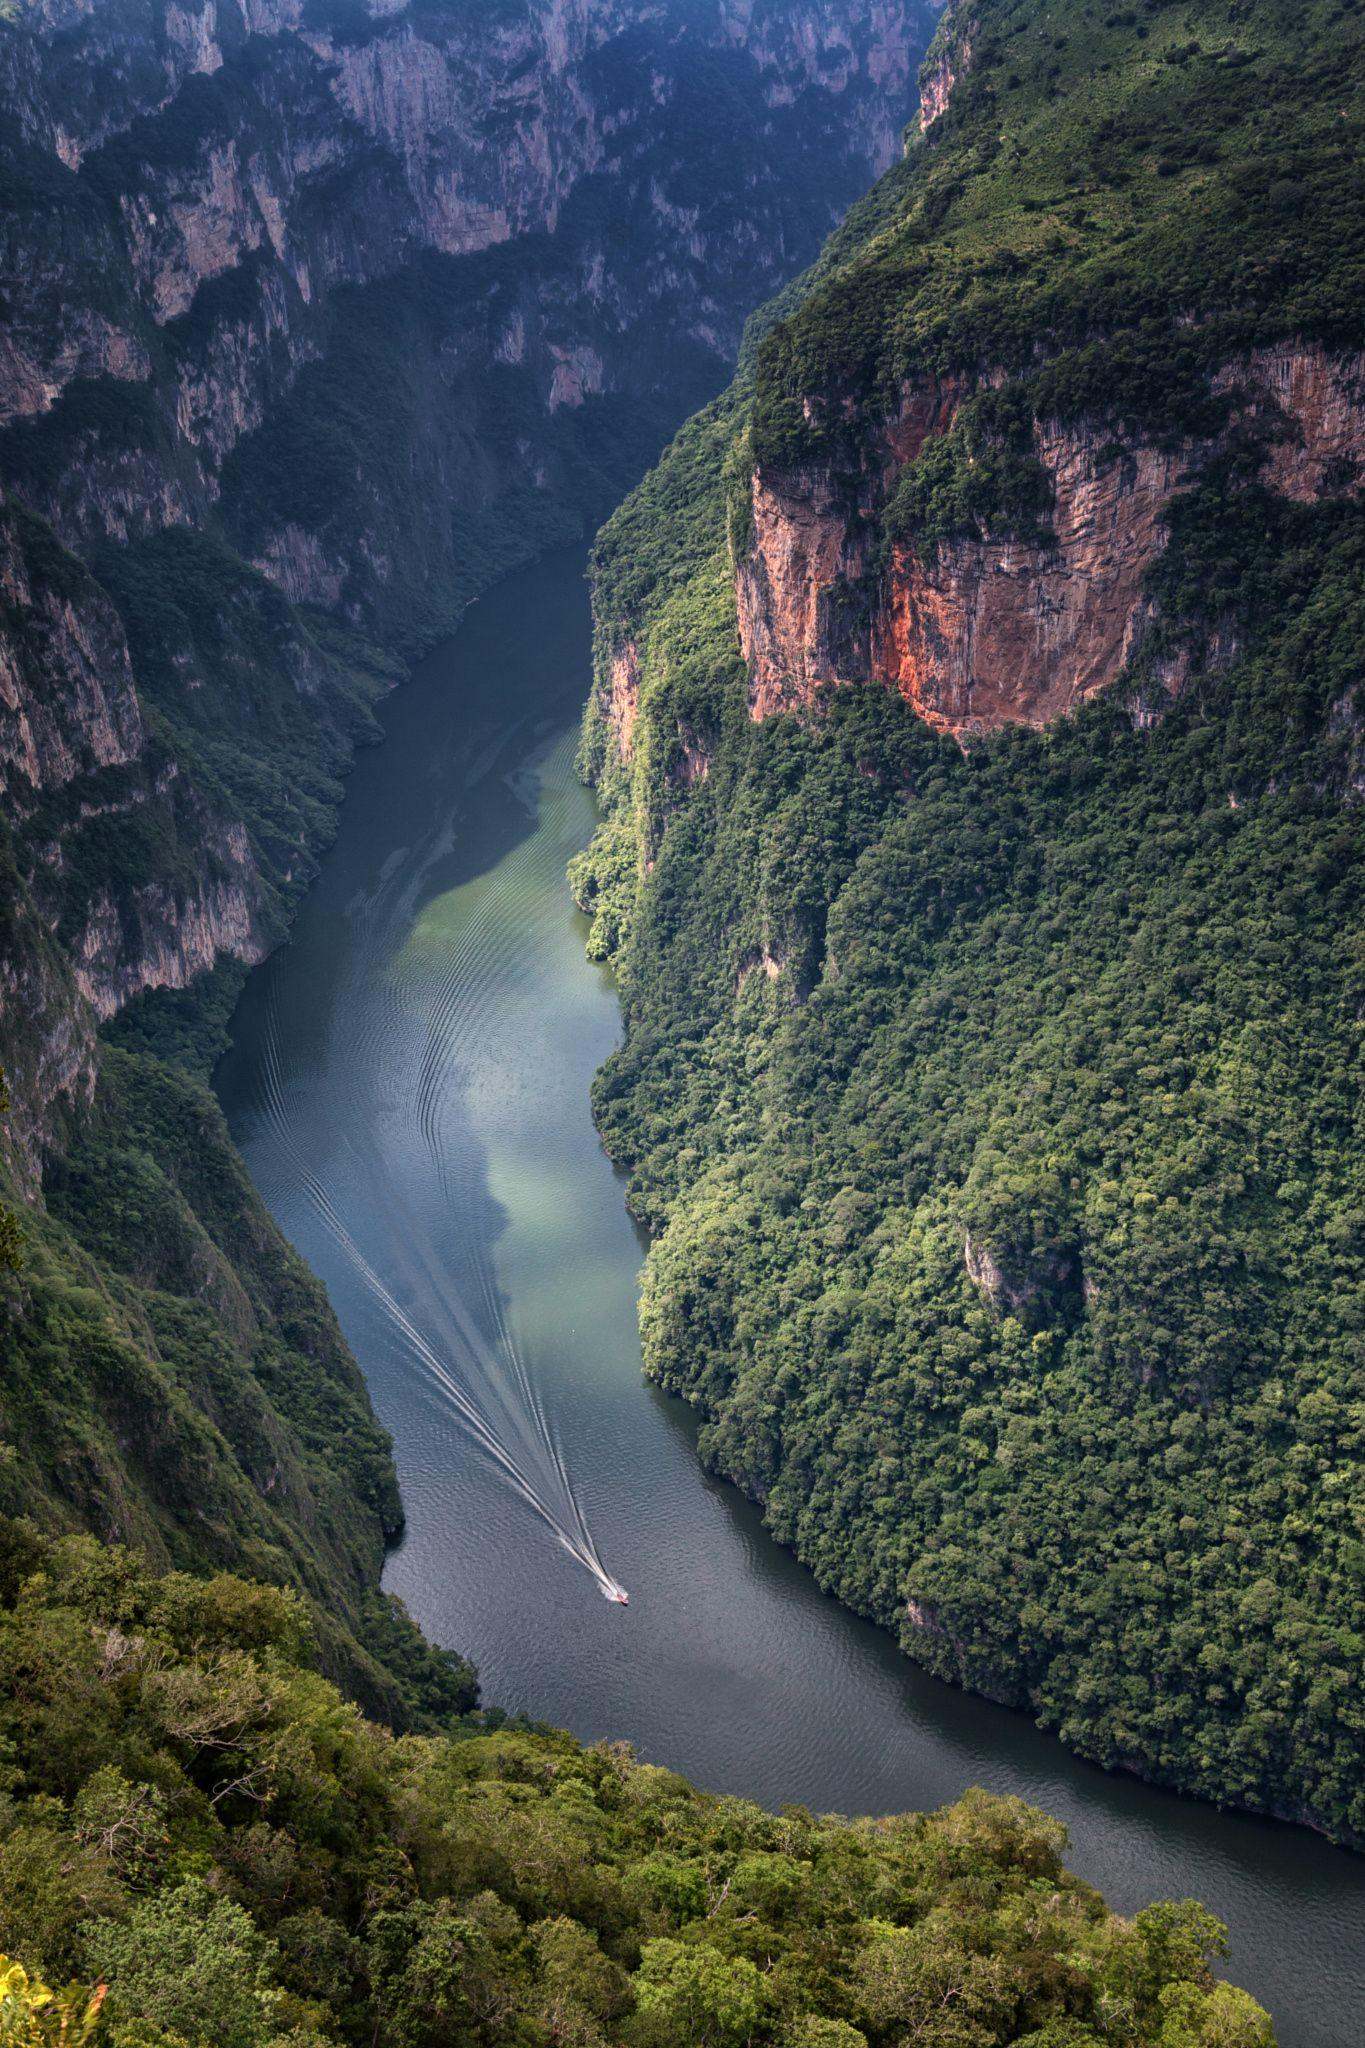 Sumidero Canyon, Chiapas, Mexico. TRAVEL. Mexic